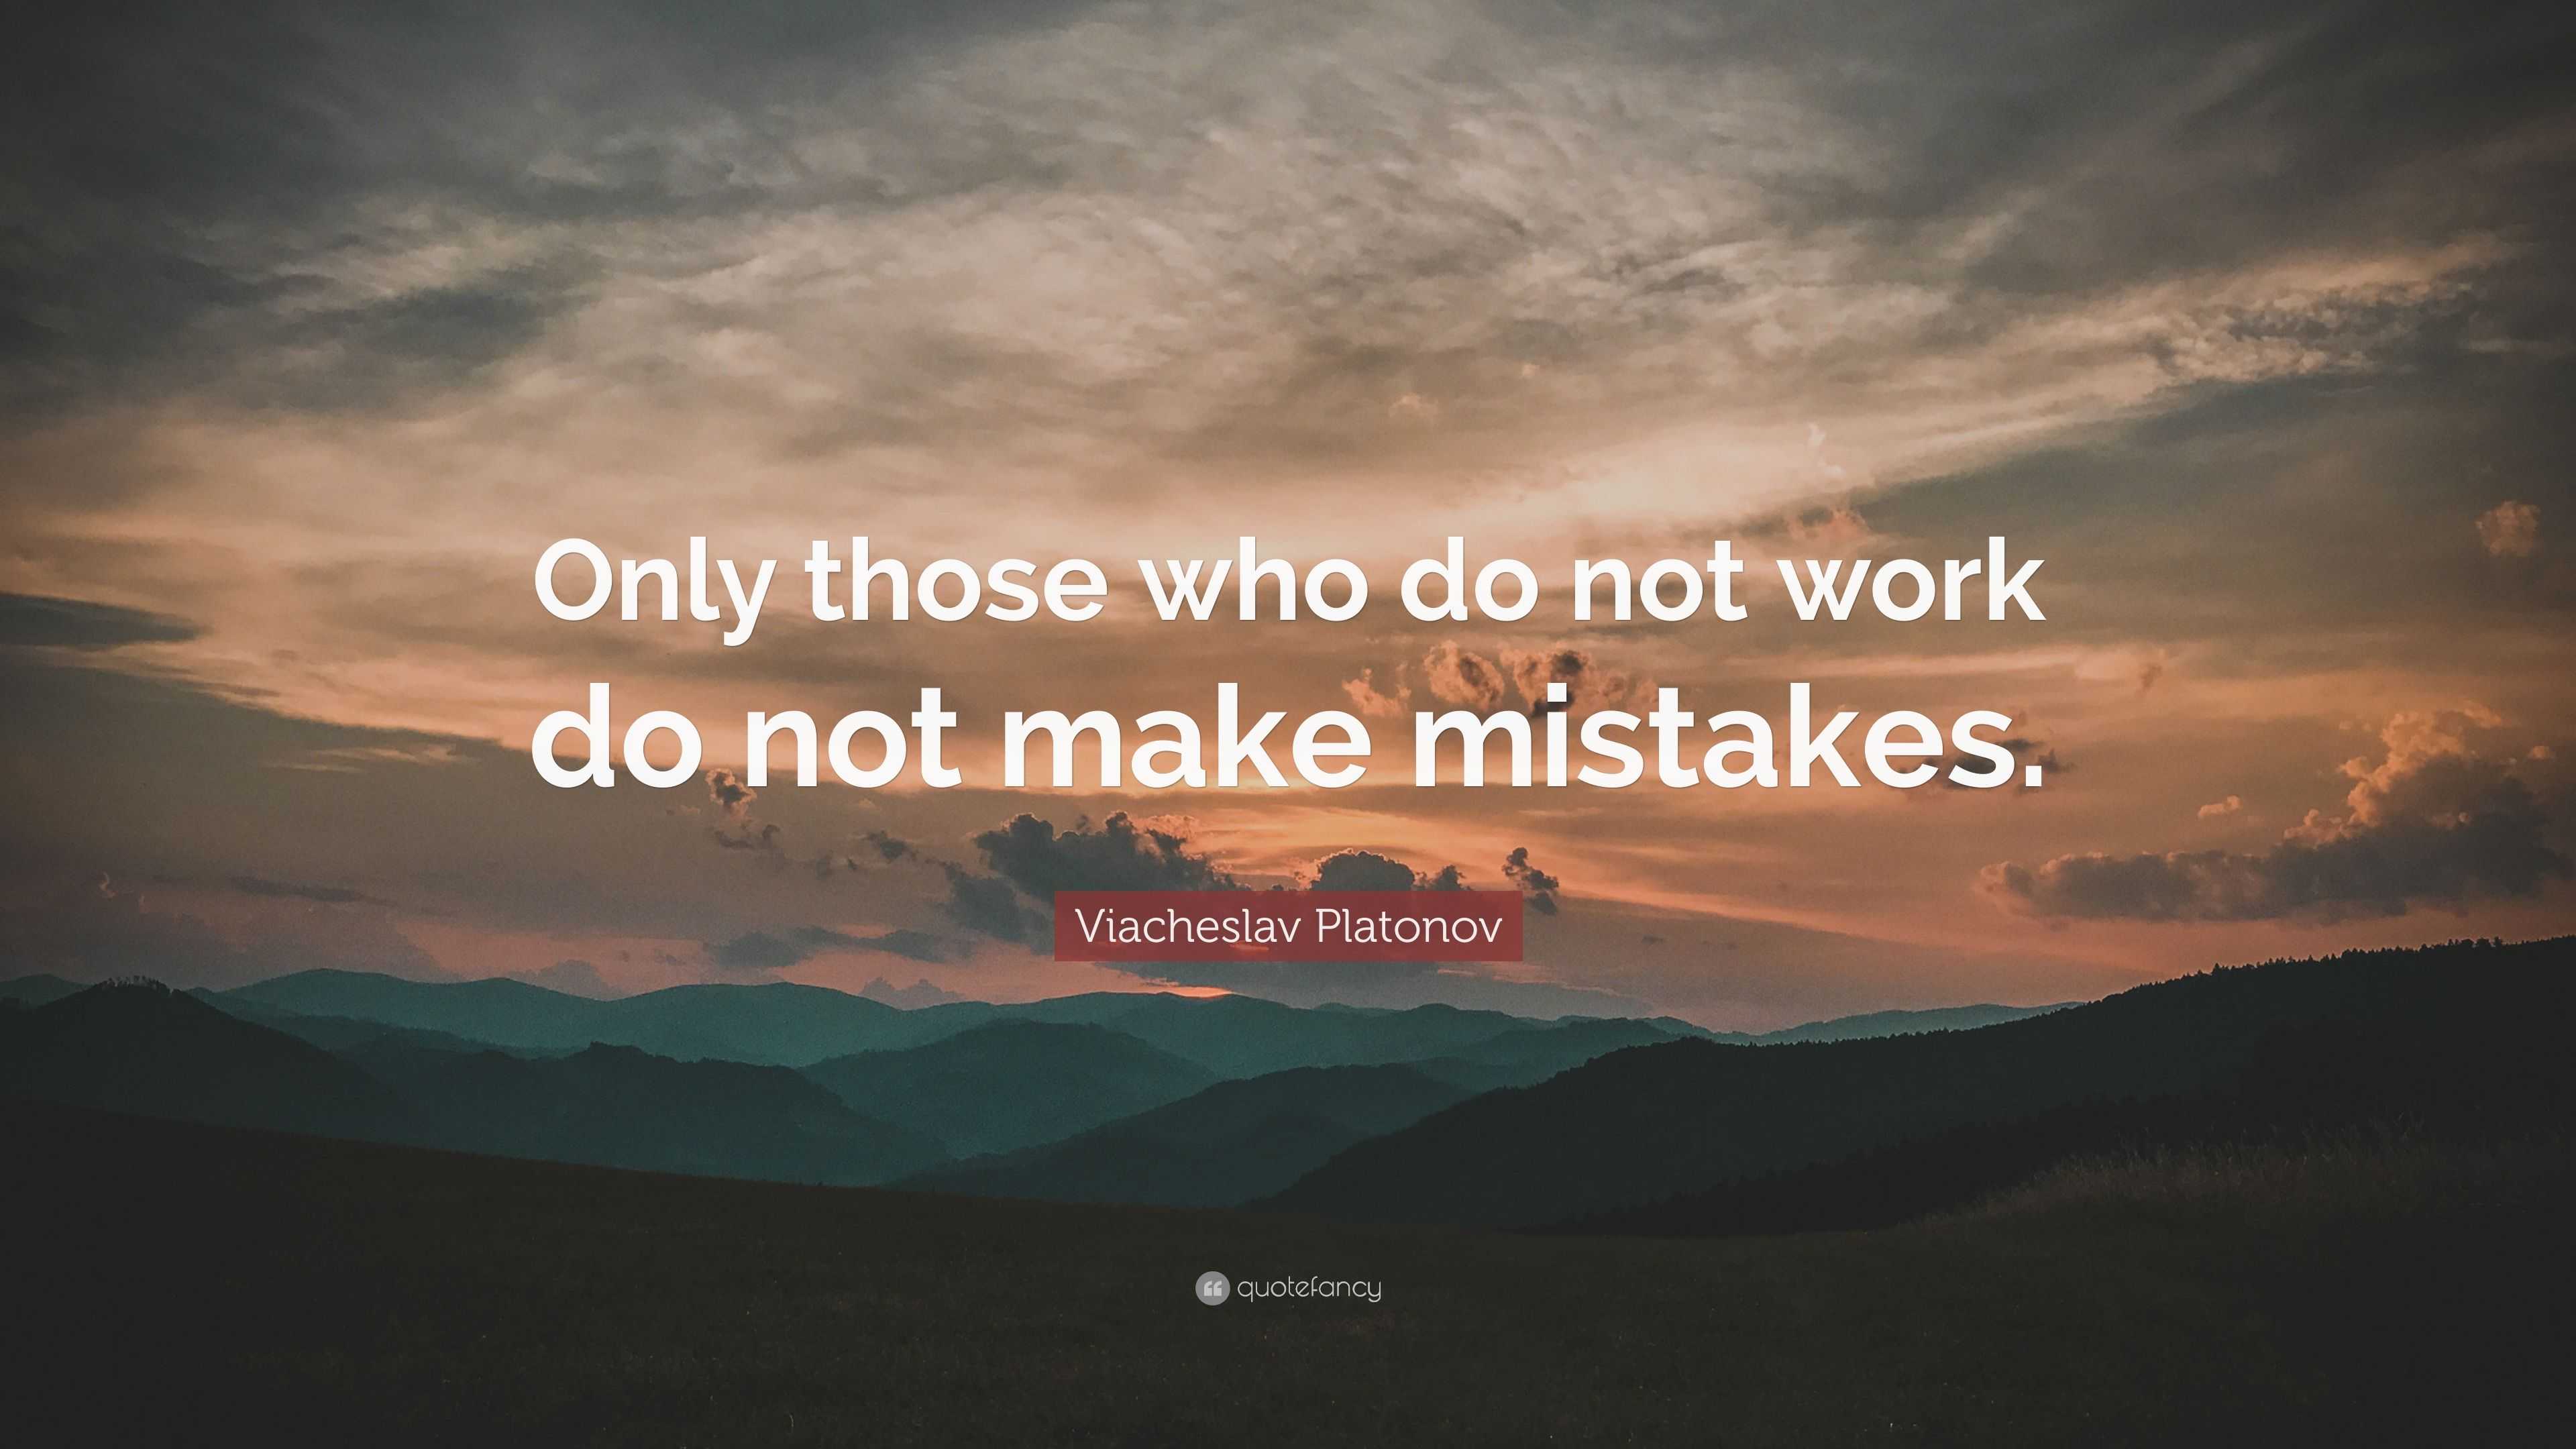 Viacheslav Platonov Quote: “Only those who do not work do not make ...